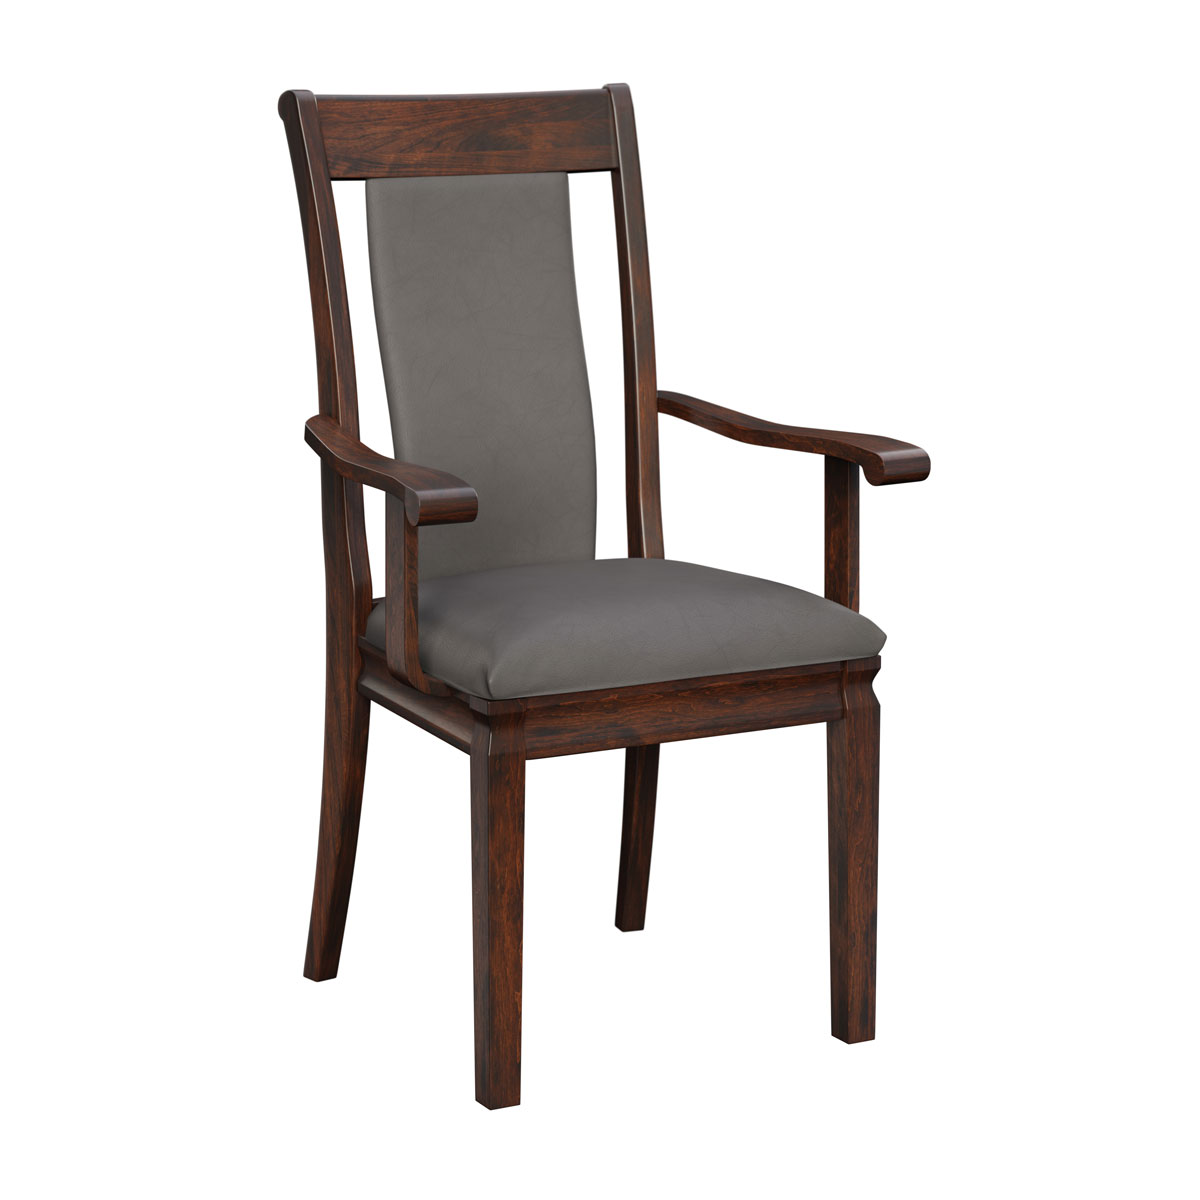 Reuben Harbor Natural and Oak Dining Chair - #96D41